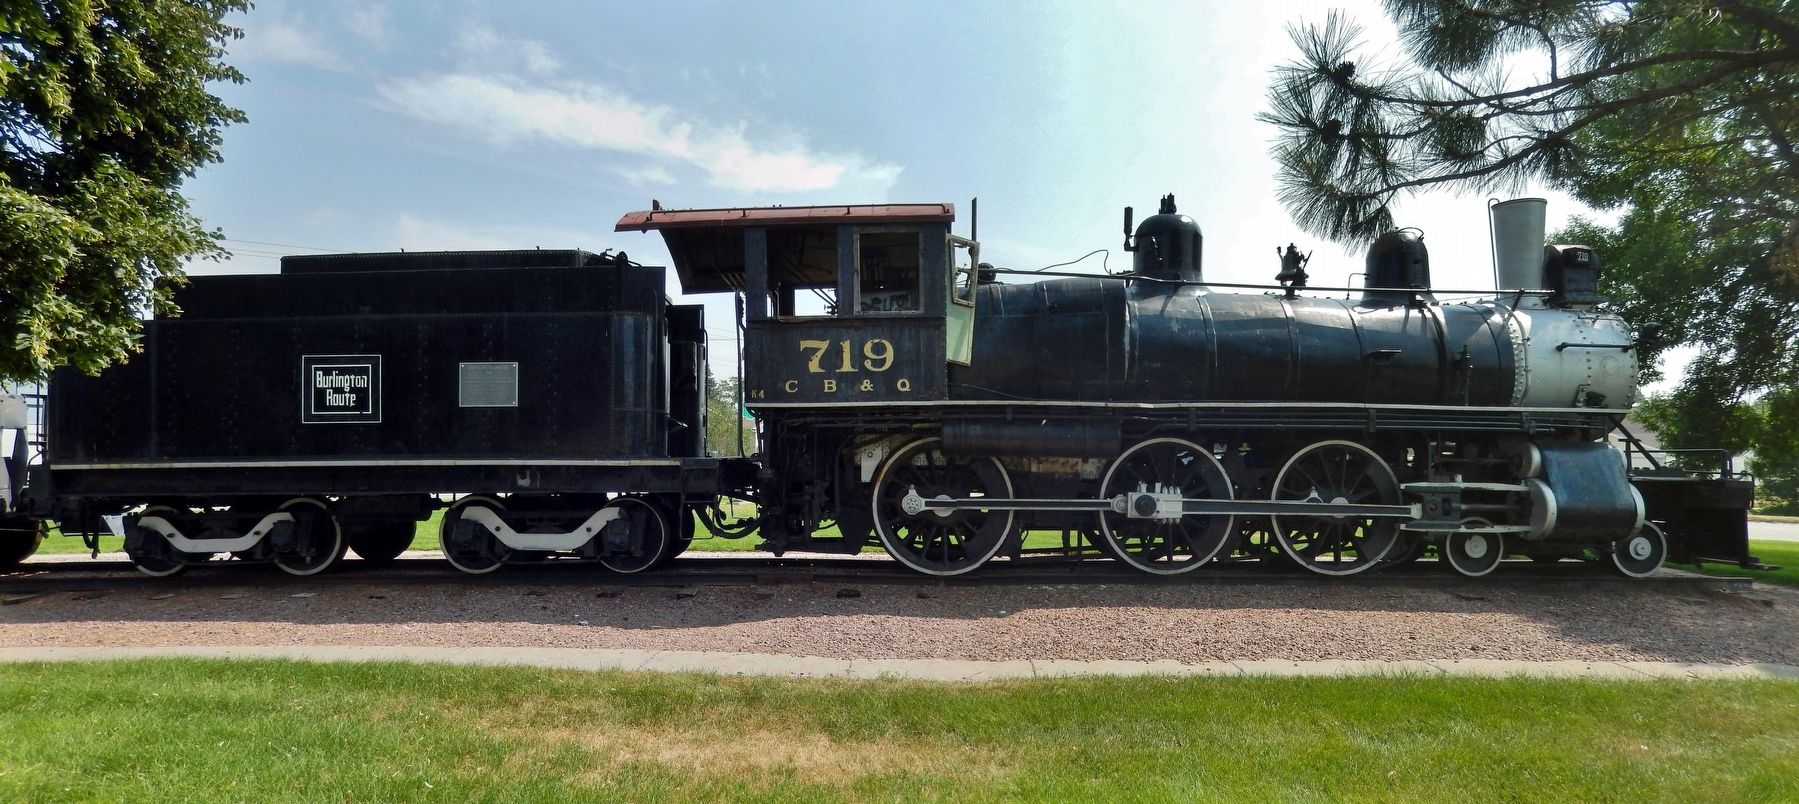 Burlington Locomotive 719 & Tender image. Click for full size.